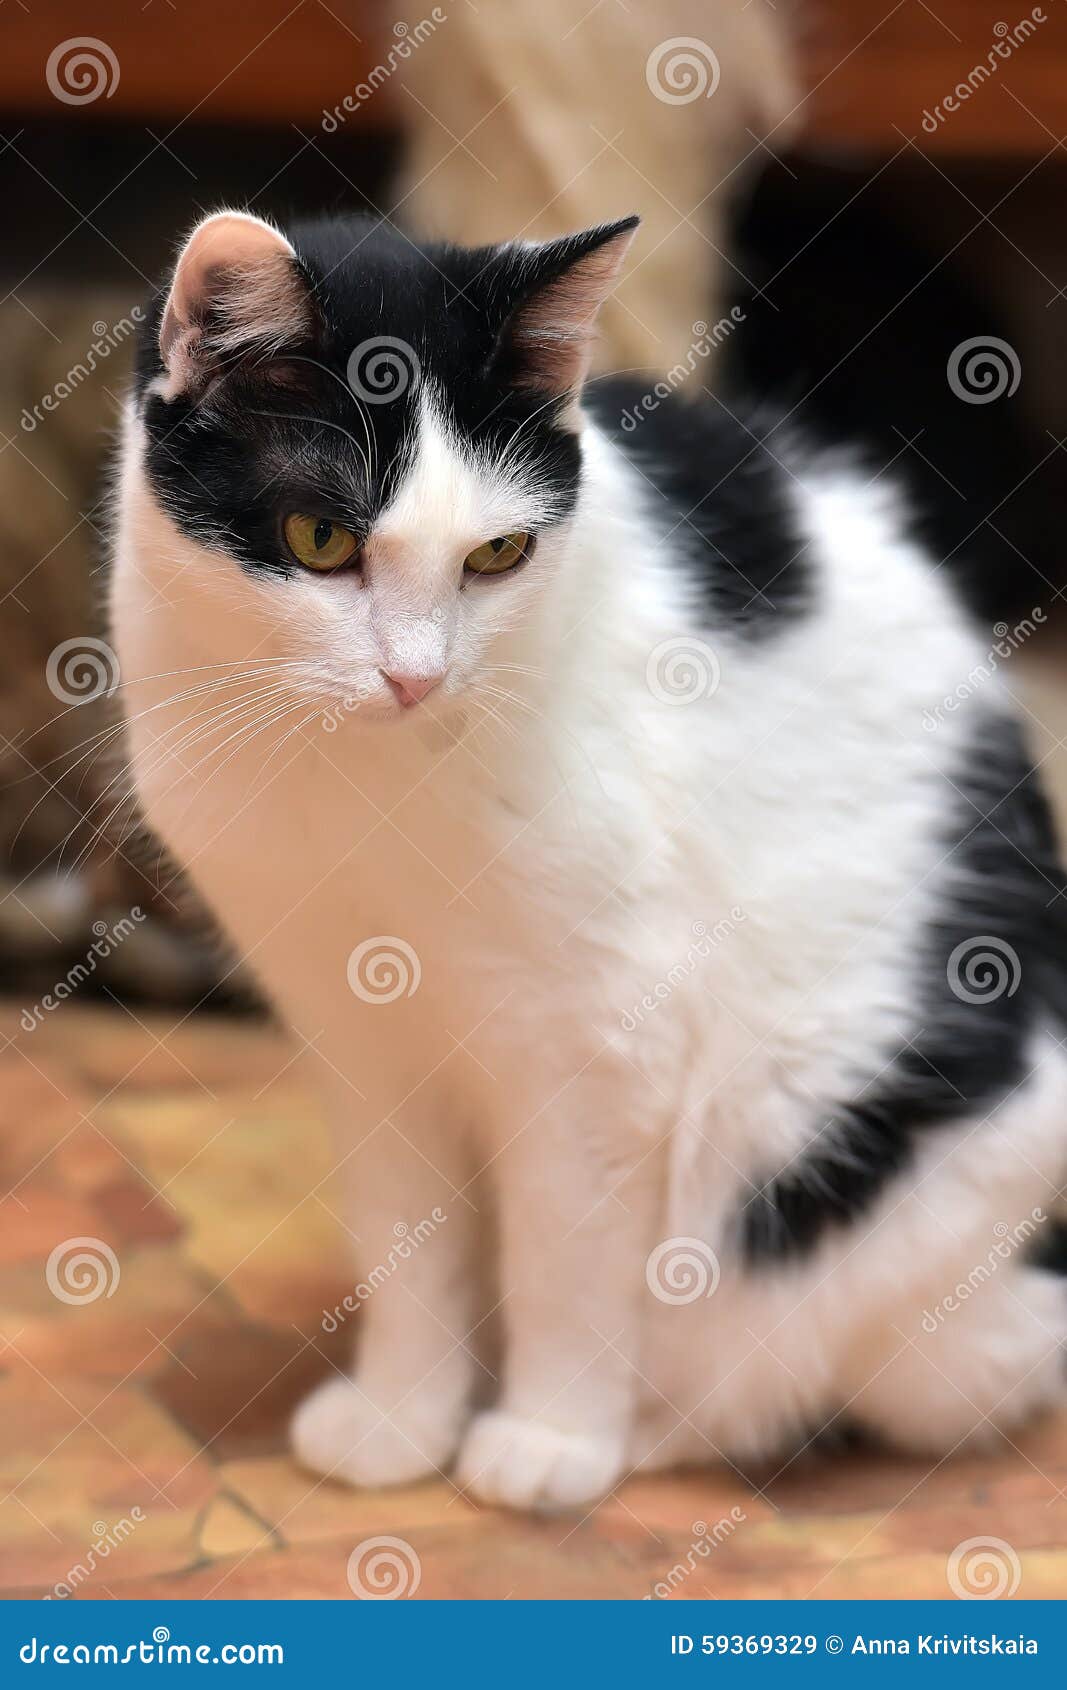 Black And White Shorthair Cat Stock Image Image Of Gazing Pedigree 59369329